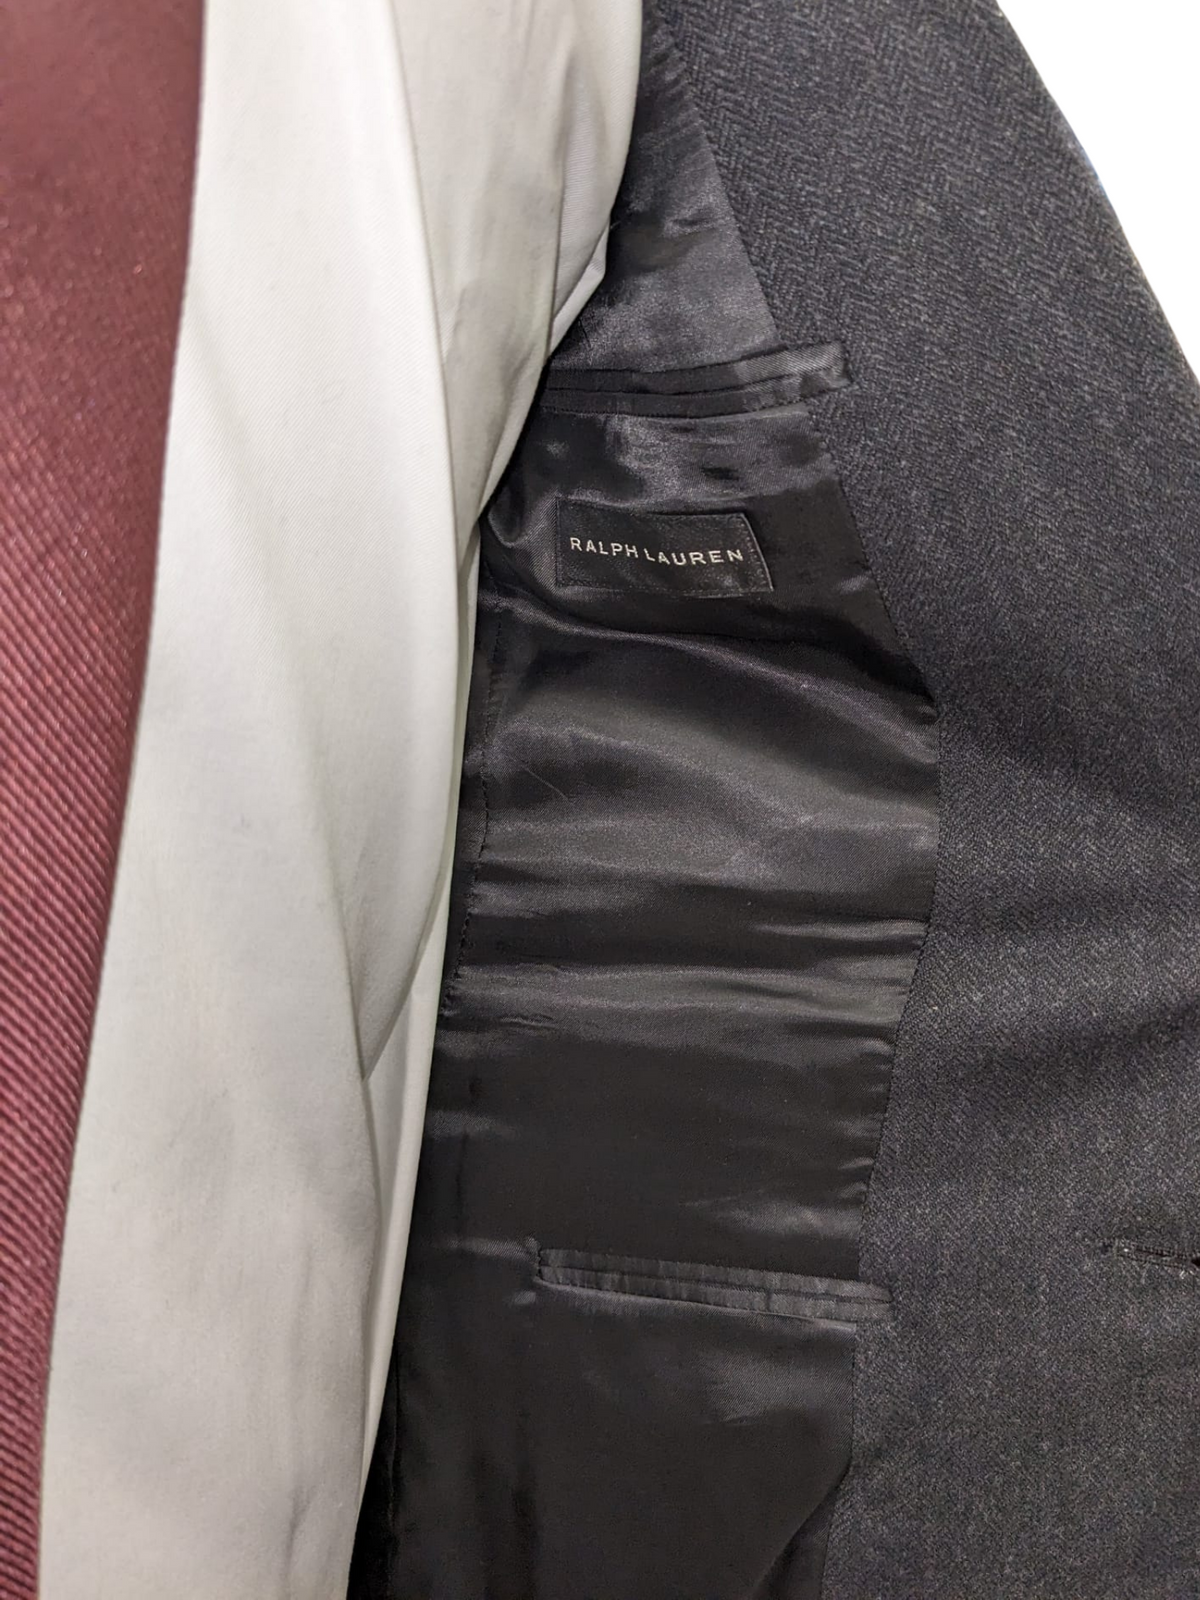 Ralph Lauren Mens Black Herringbone 38L 100% Wool 2 Piece Suit